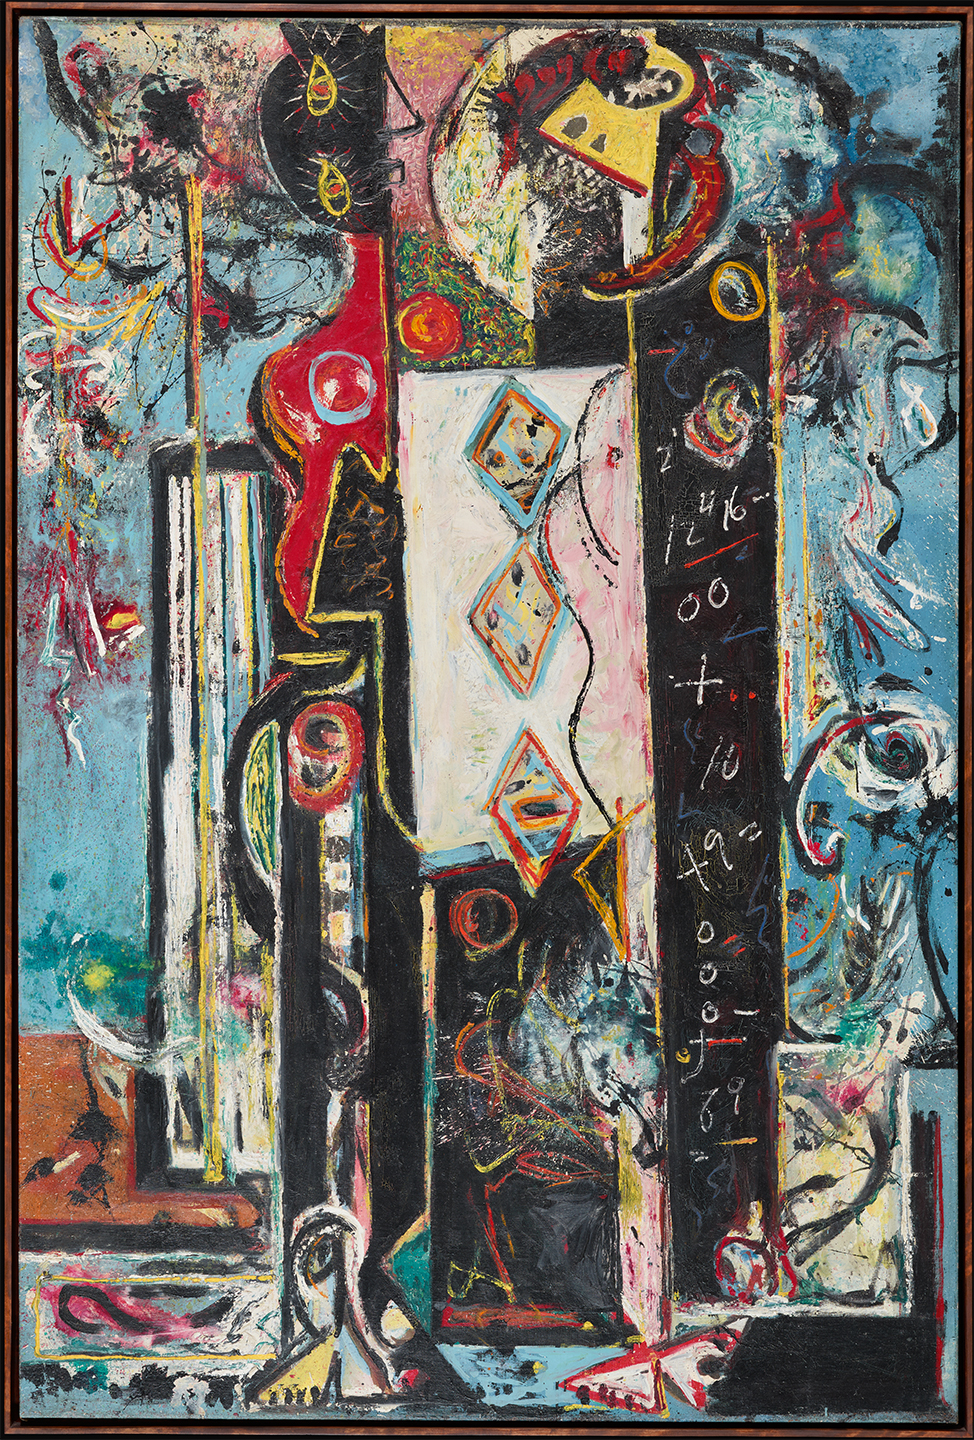 Jackson Pollock, Male and Female, 1942-1943